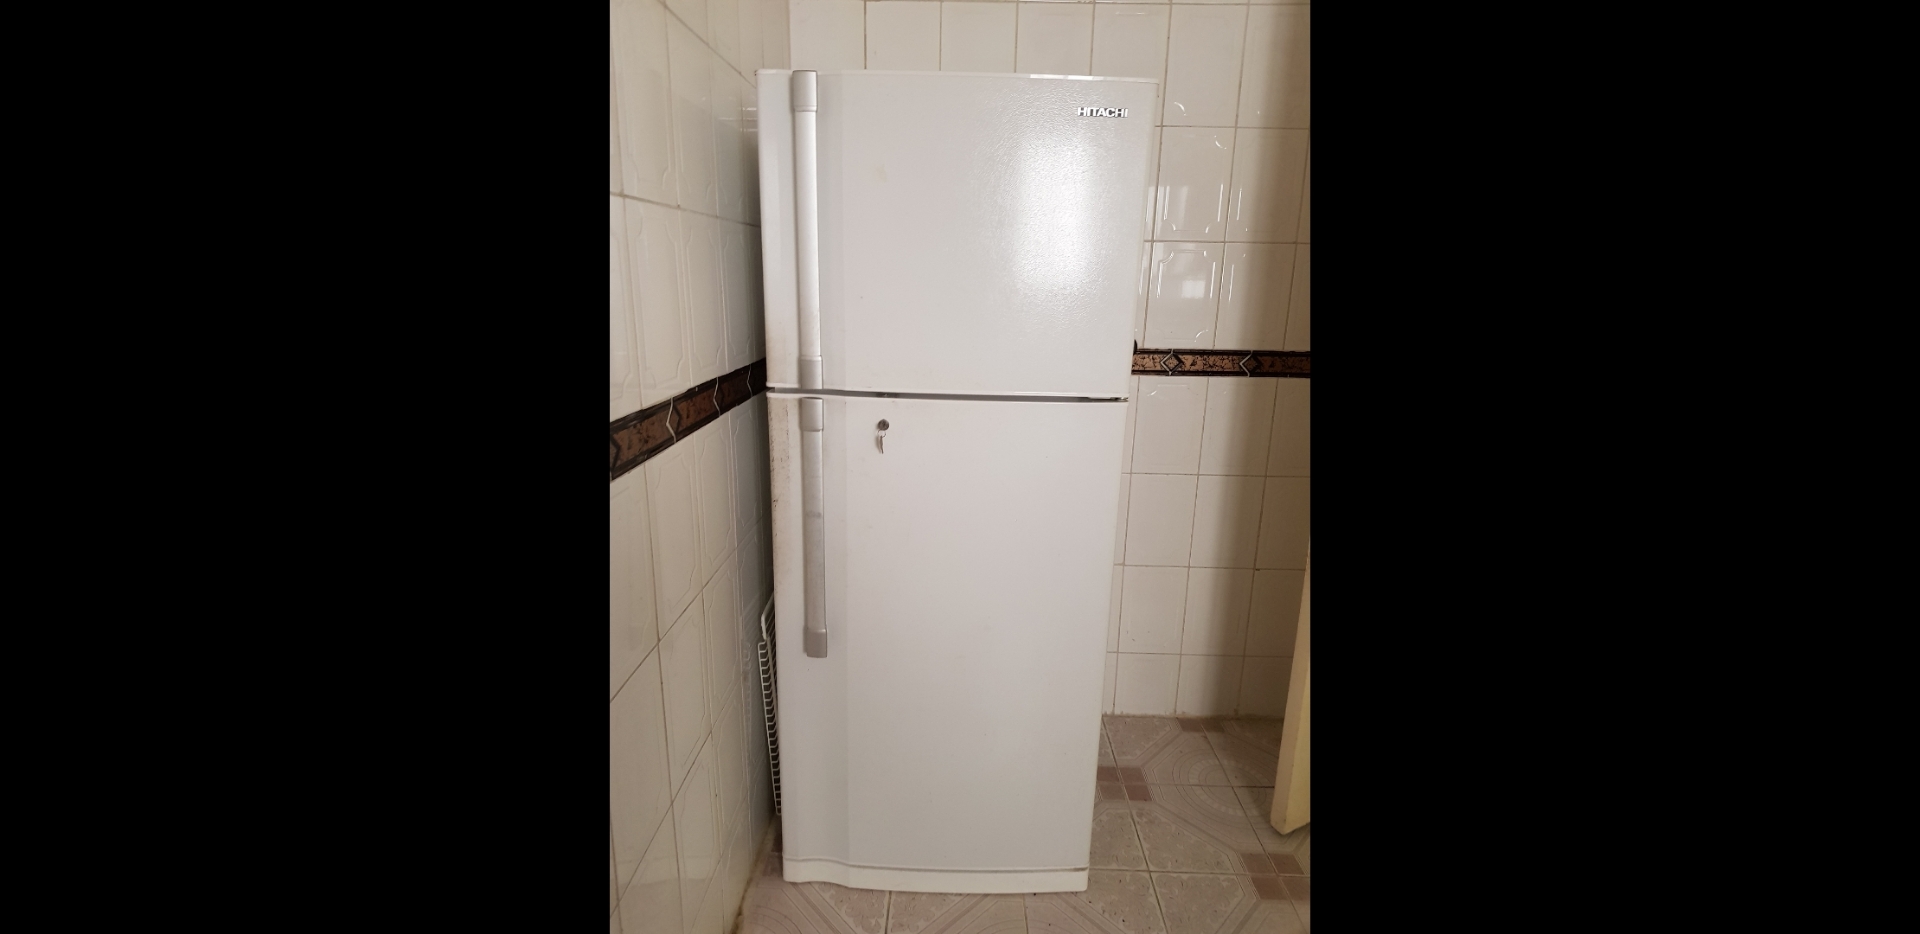 LG latest model fridge with 2doors up and down-  ثلاجة نوع هيتاشي مقاس...